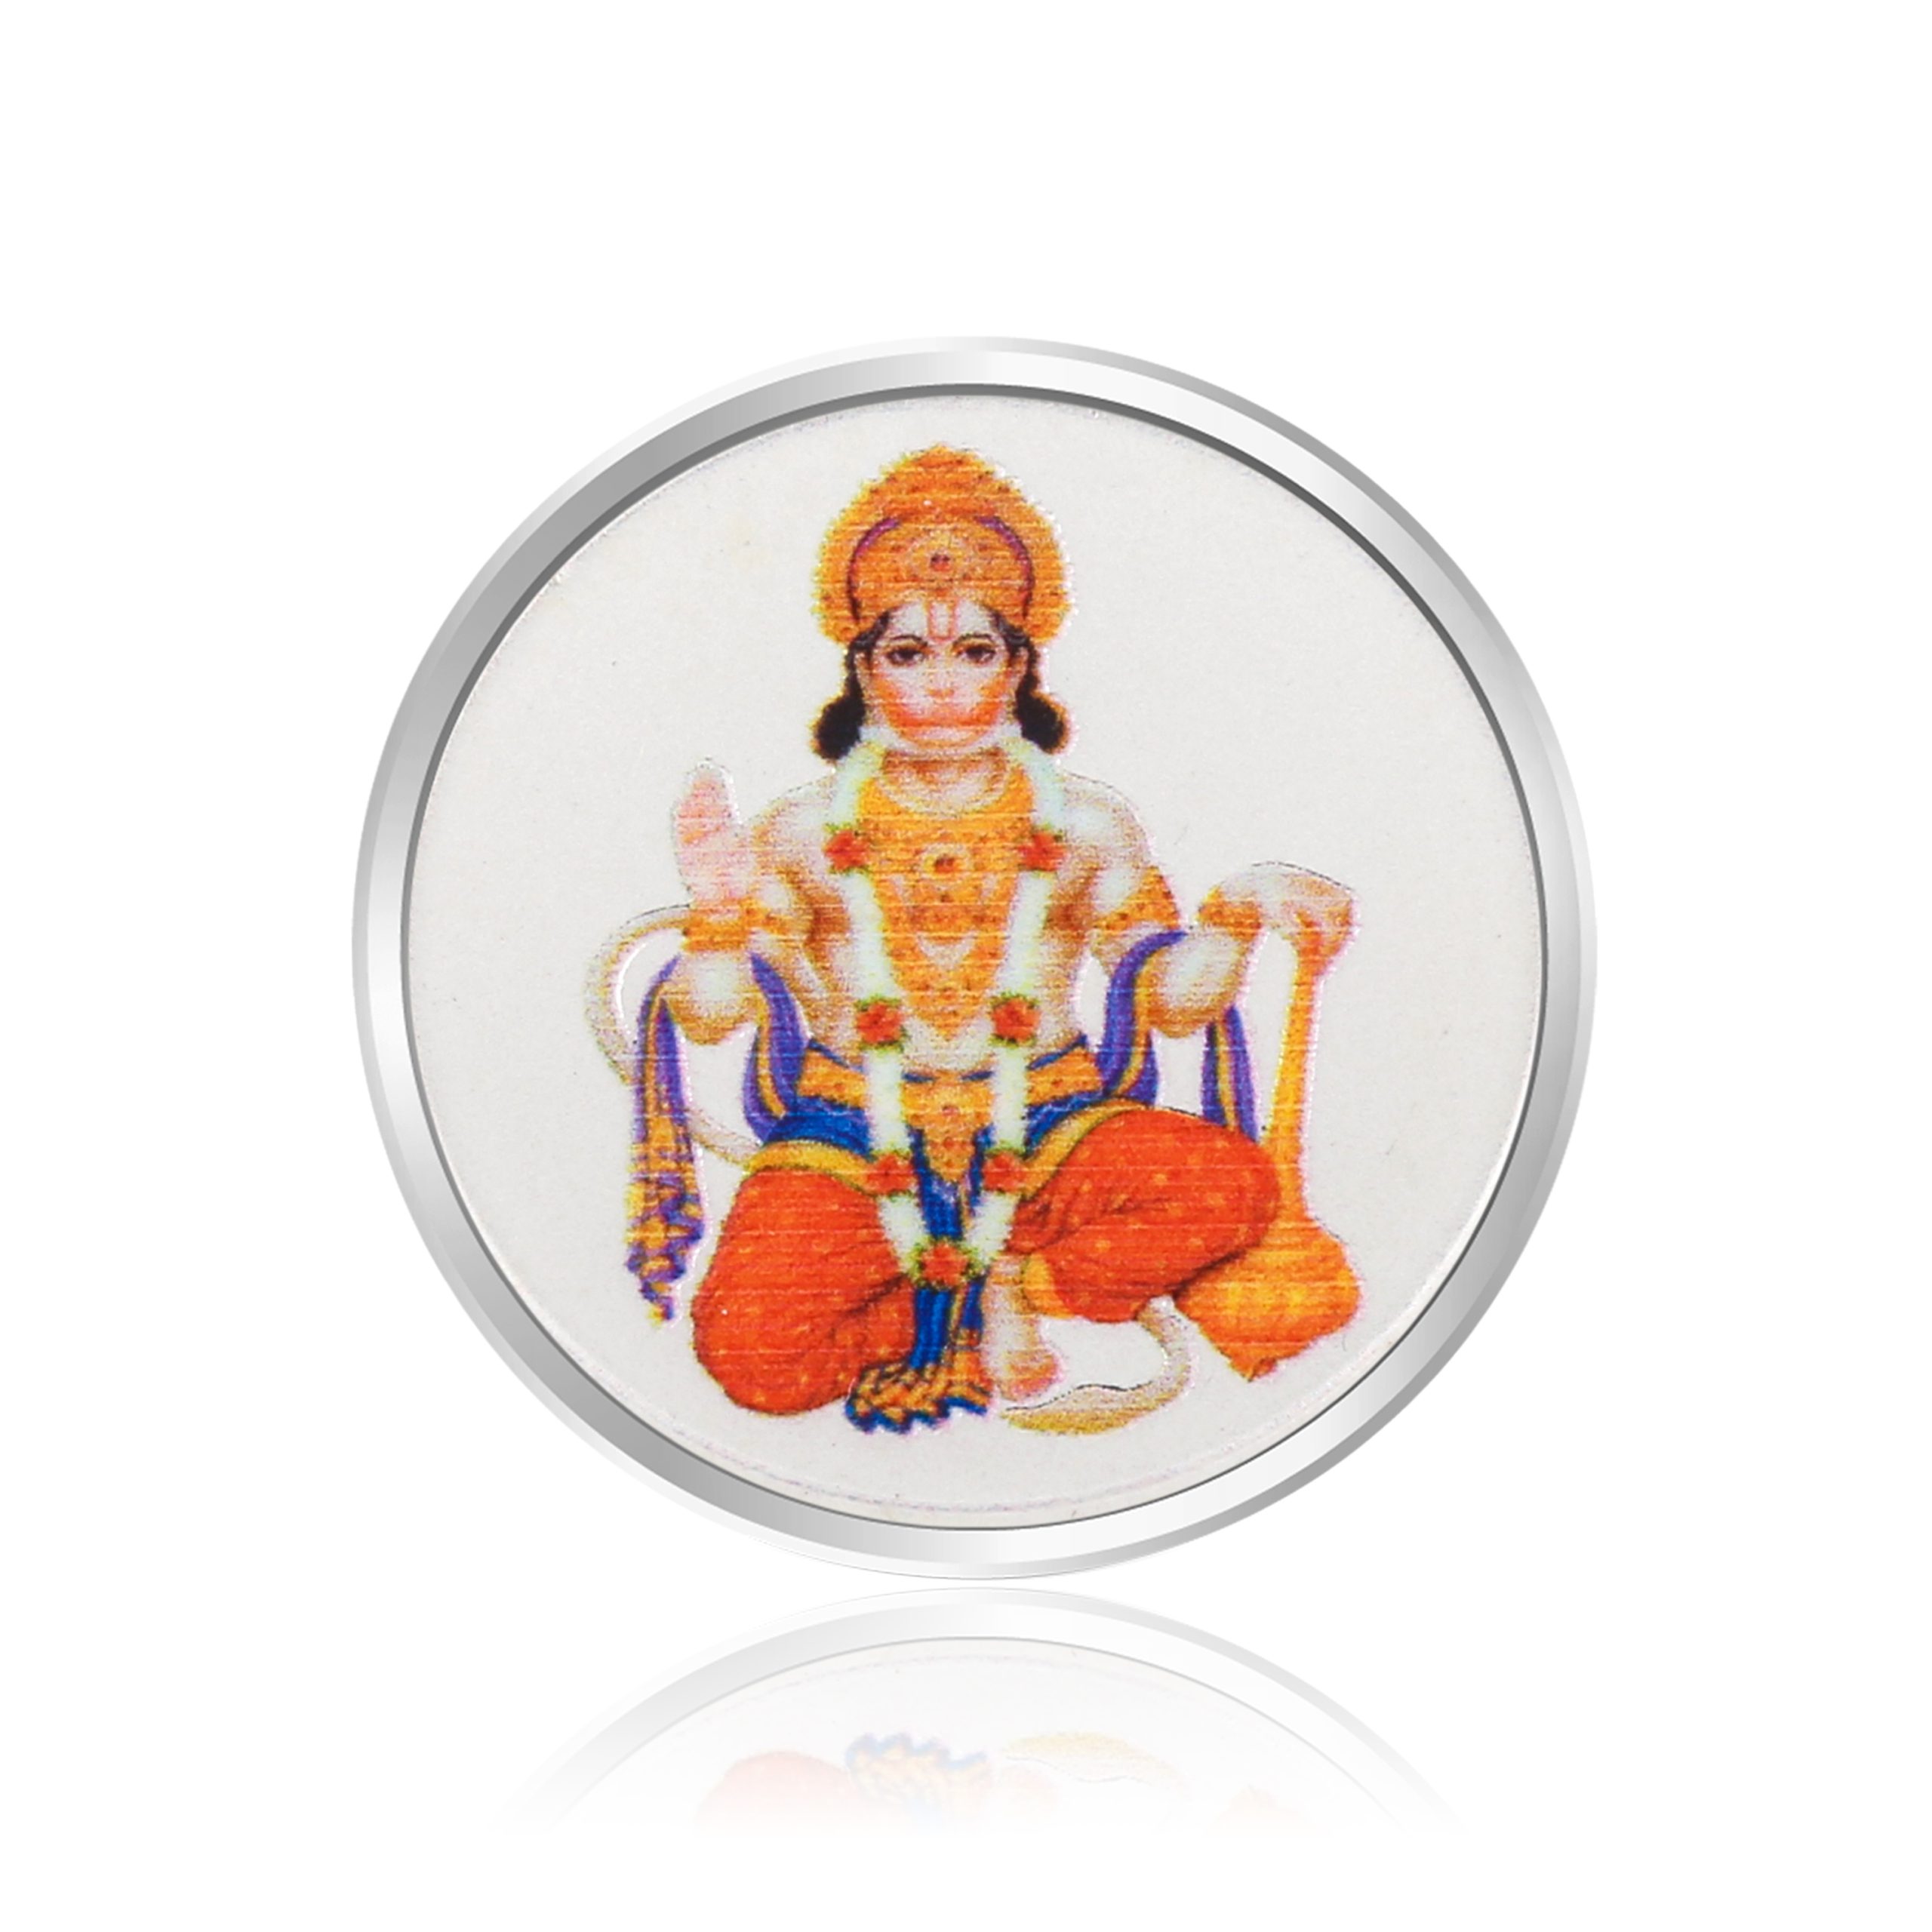 10 gm Hanuman Silver Coin